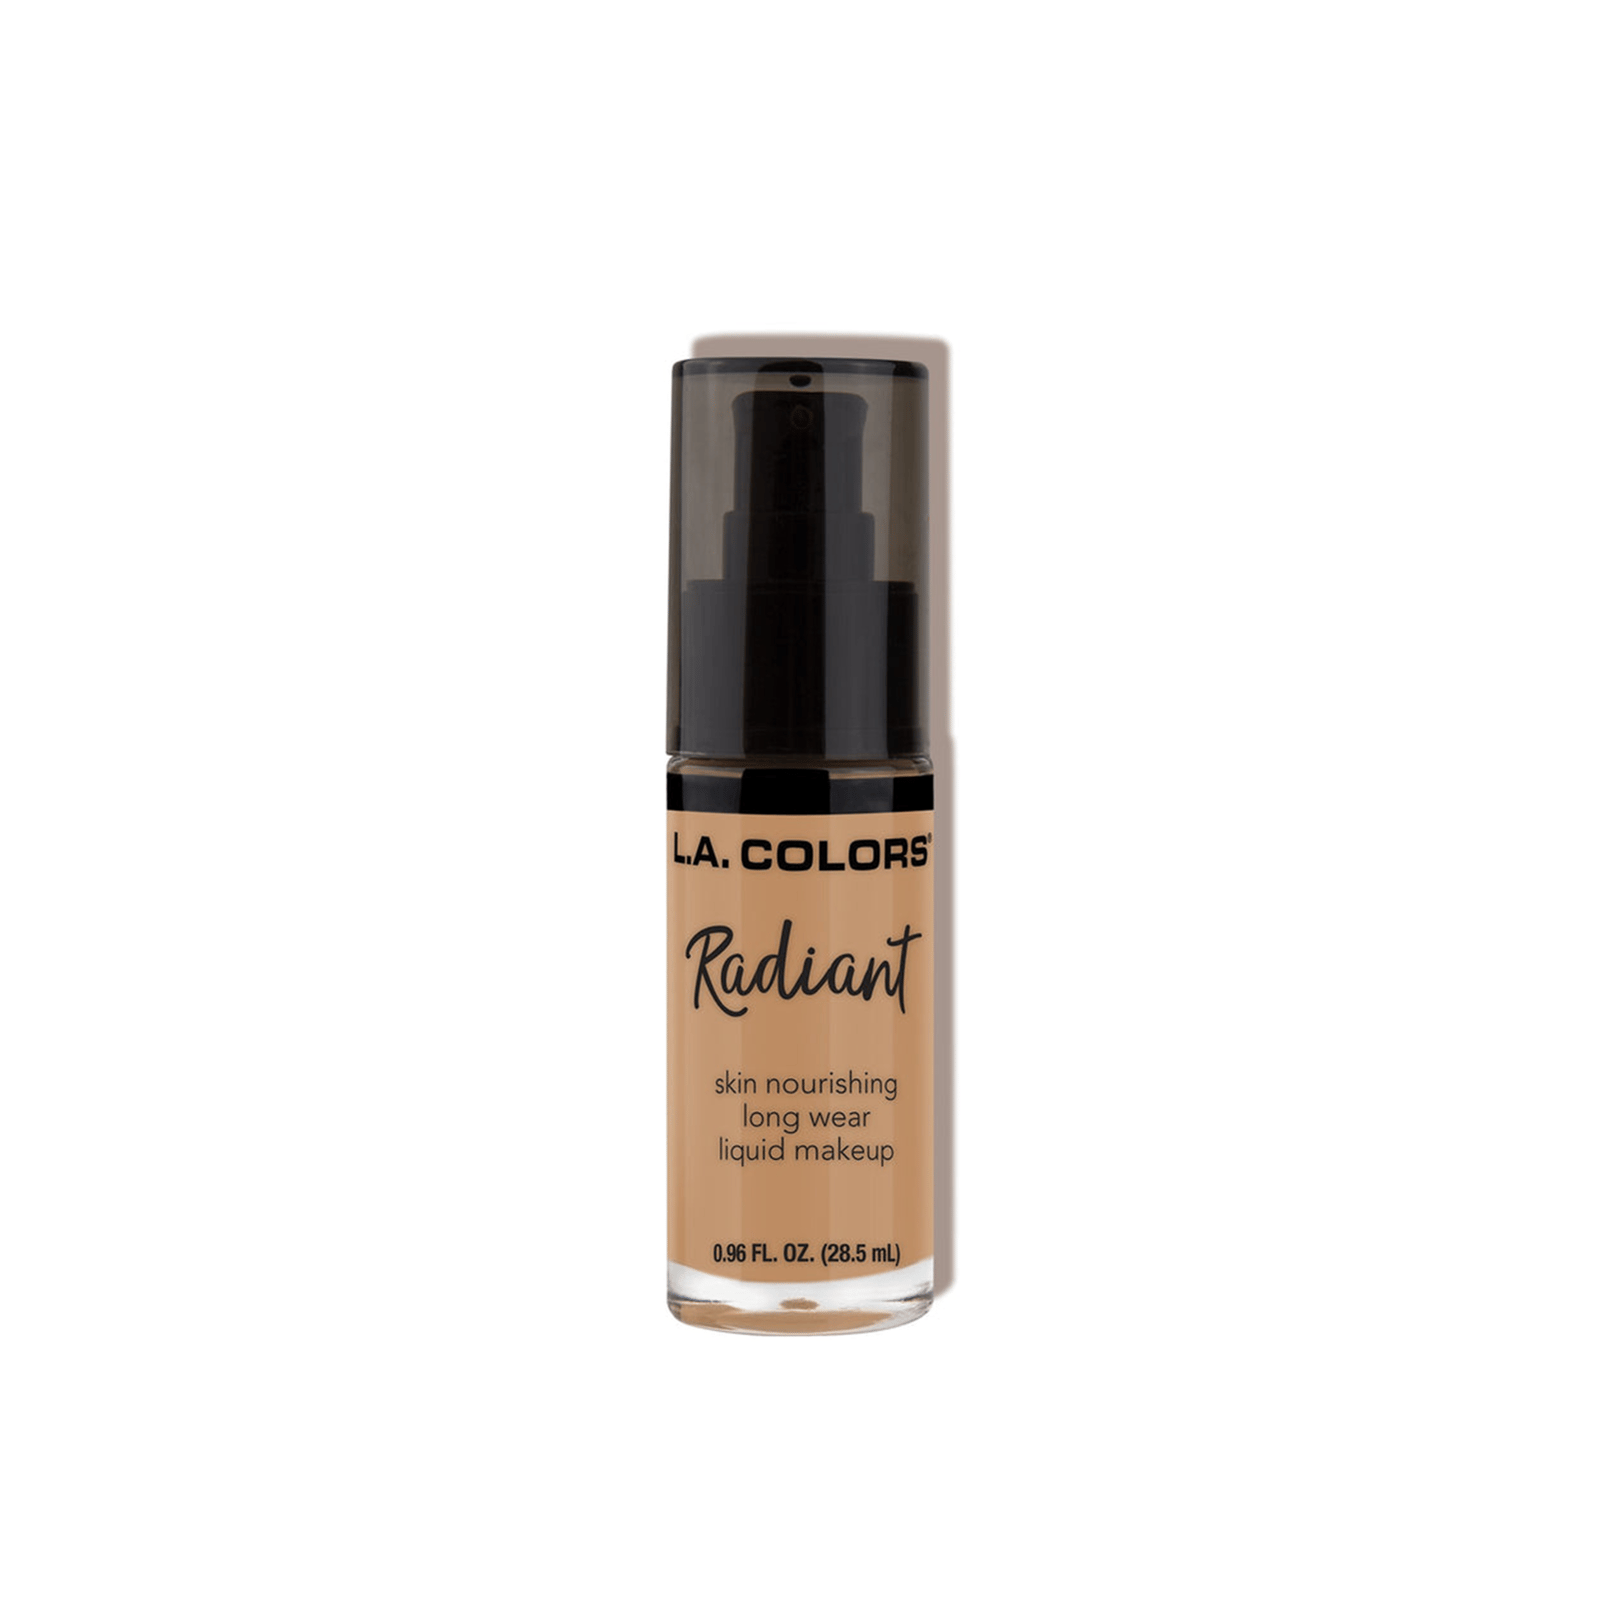 L.A. Colors Radiant Liquid Makeup Foundation CLM393 Light Toffee 28.5ml (0.96 fl oz)